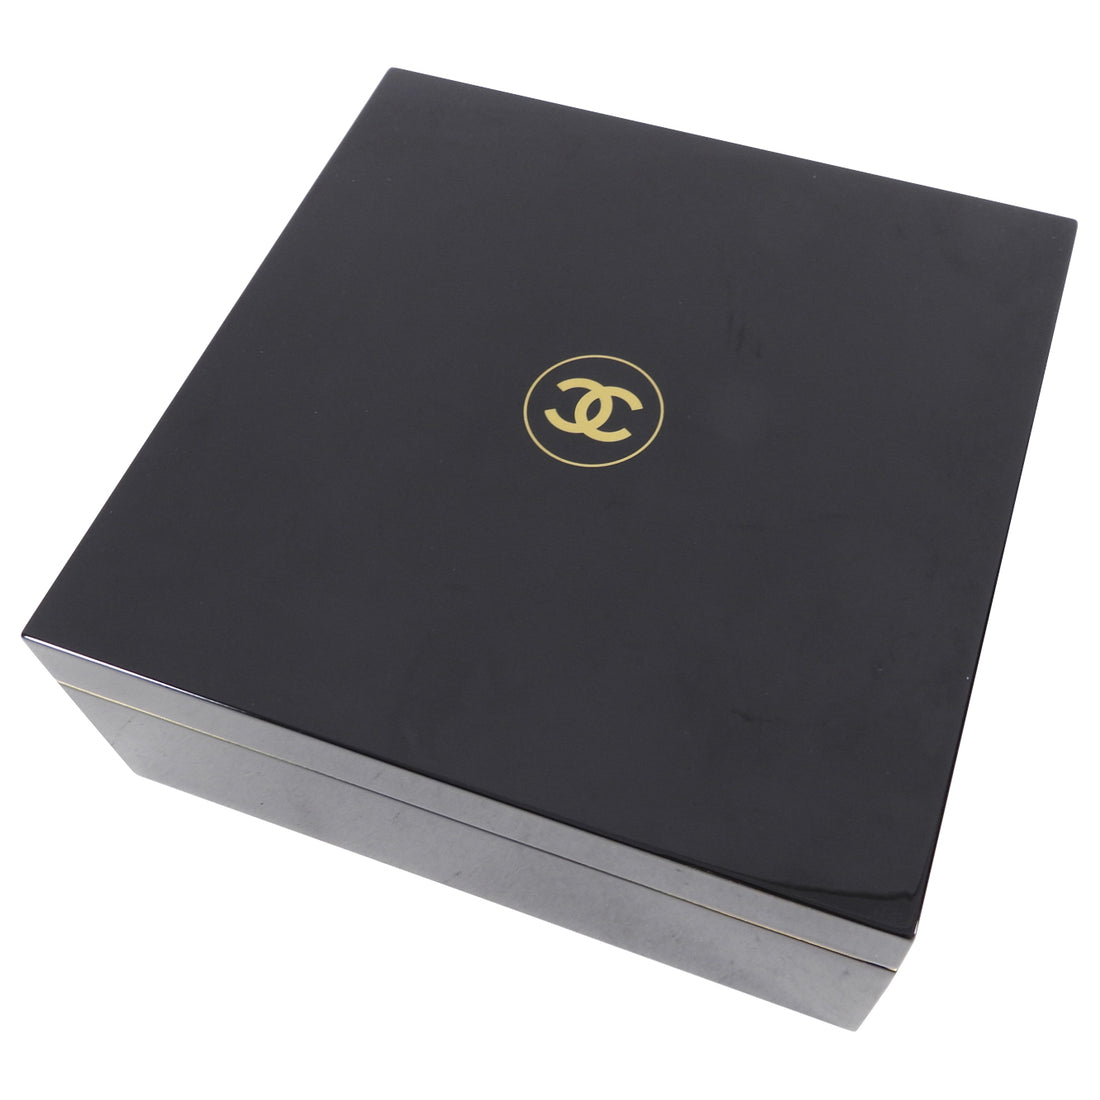 Chanel Sublimage VIP Gift Black CC Lacquer Jewelry Box